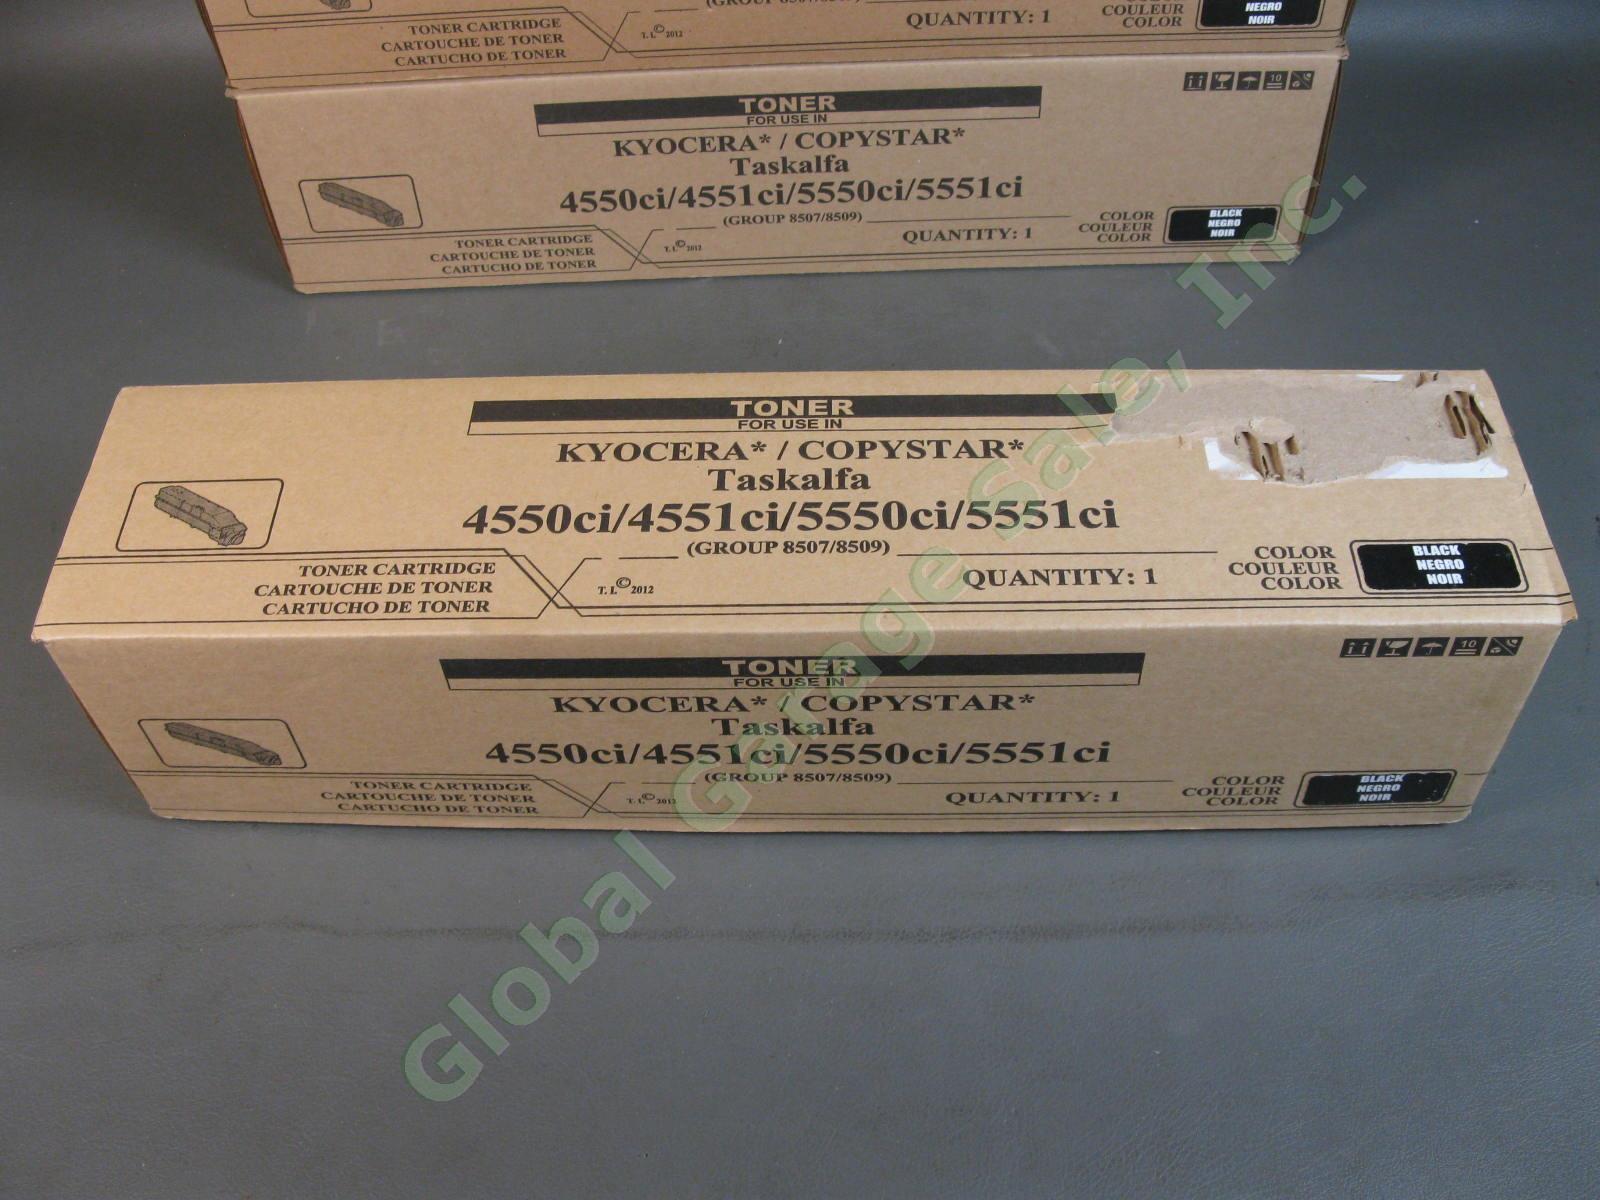 LOT of 5 Kyocera Copystar Taskalfa TK8507K 8509 Compatible Black Toner w/Chip NR 1